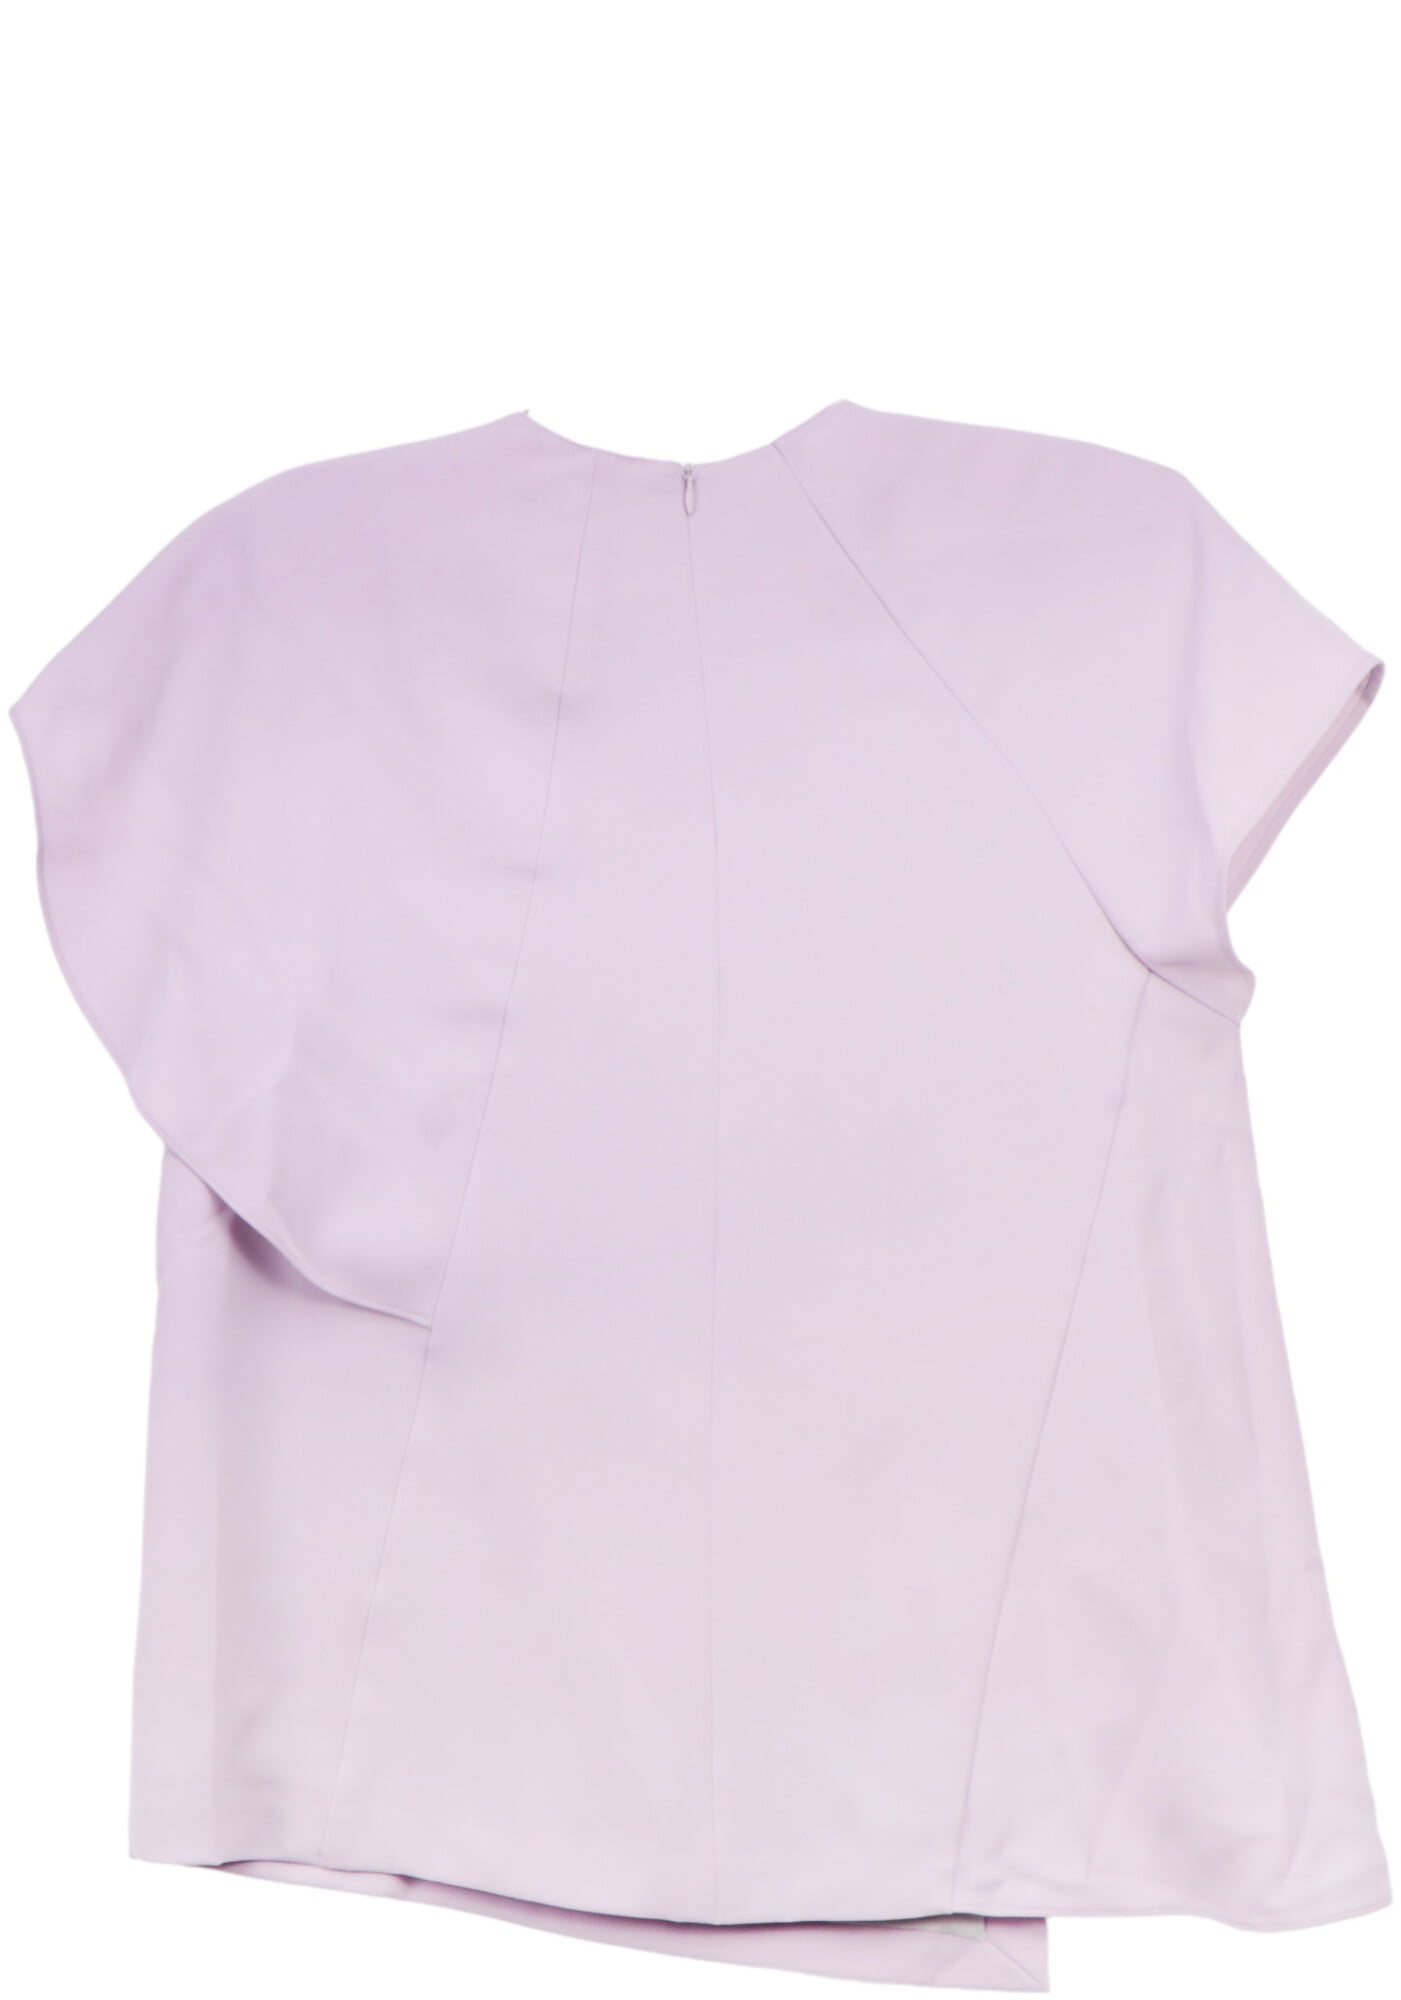 Akiranaka Women's Purple Polyester Ruffle Top Blouse - 3 - Walmart.com